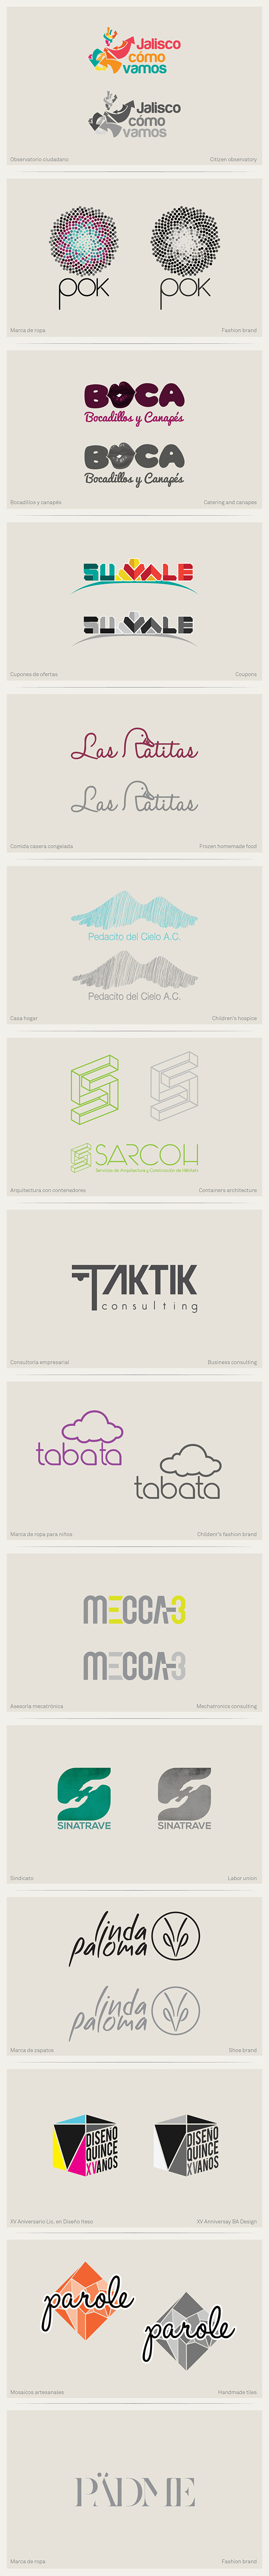 logo brand company